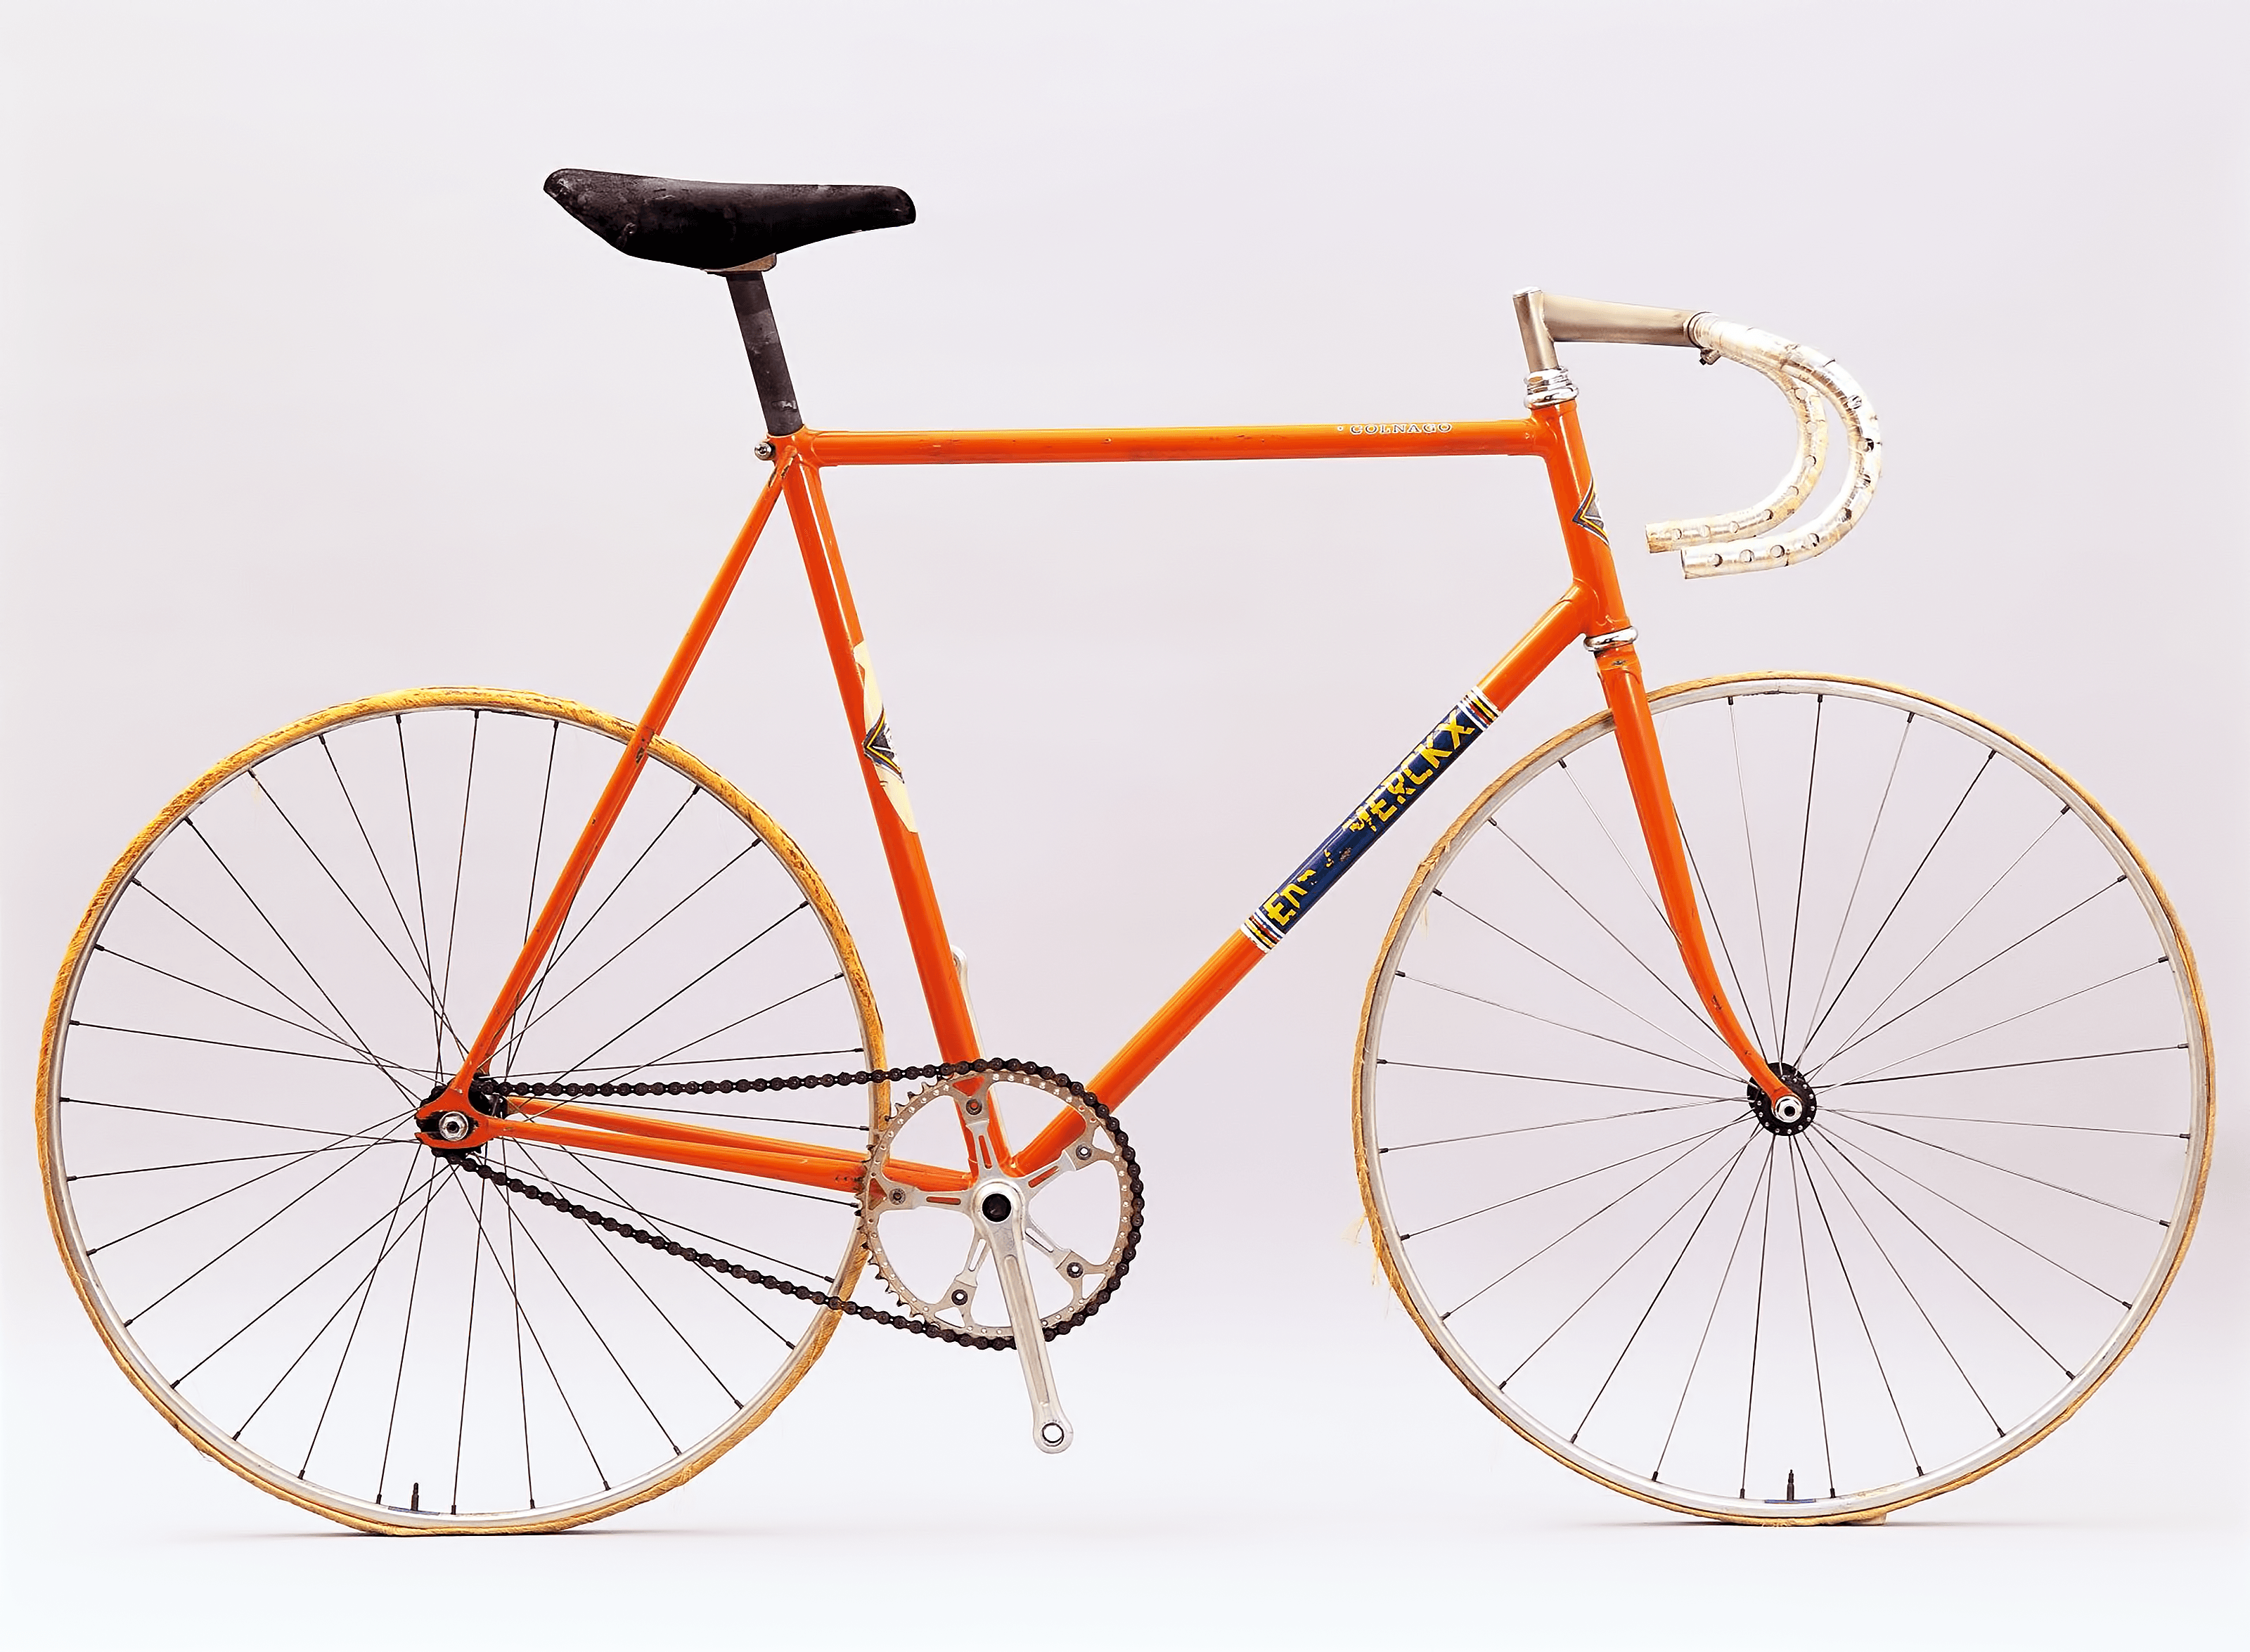 Colnago велосипеды. Eddy Merckx велосипеды. Трековый велосипед Colnago. Colnago велосипеды ретро. Велосипед Eddy Merckx карбон.